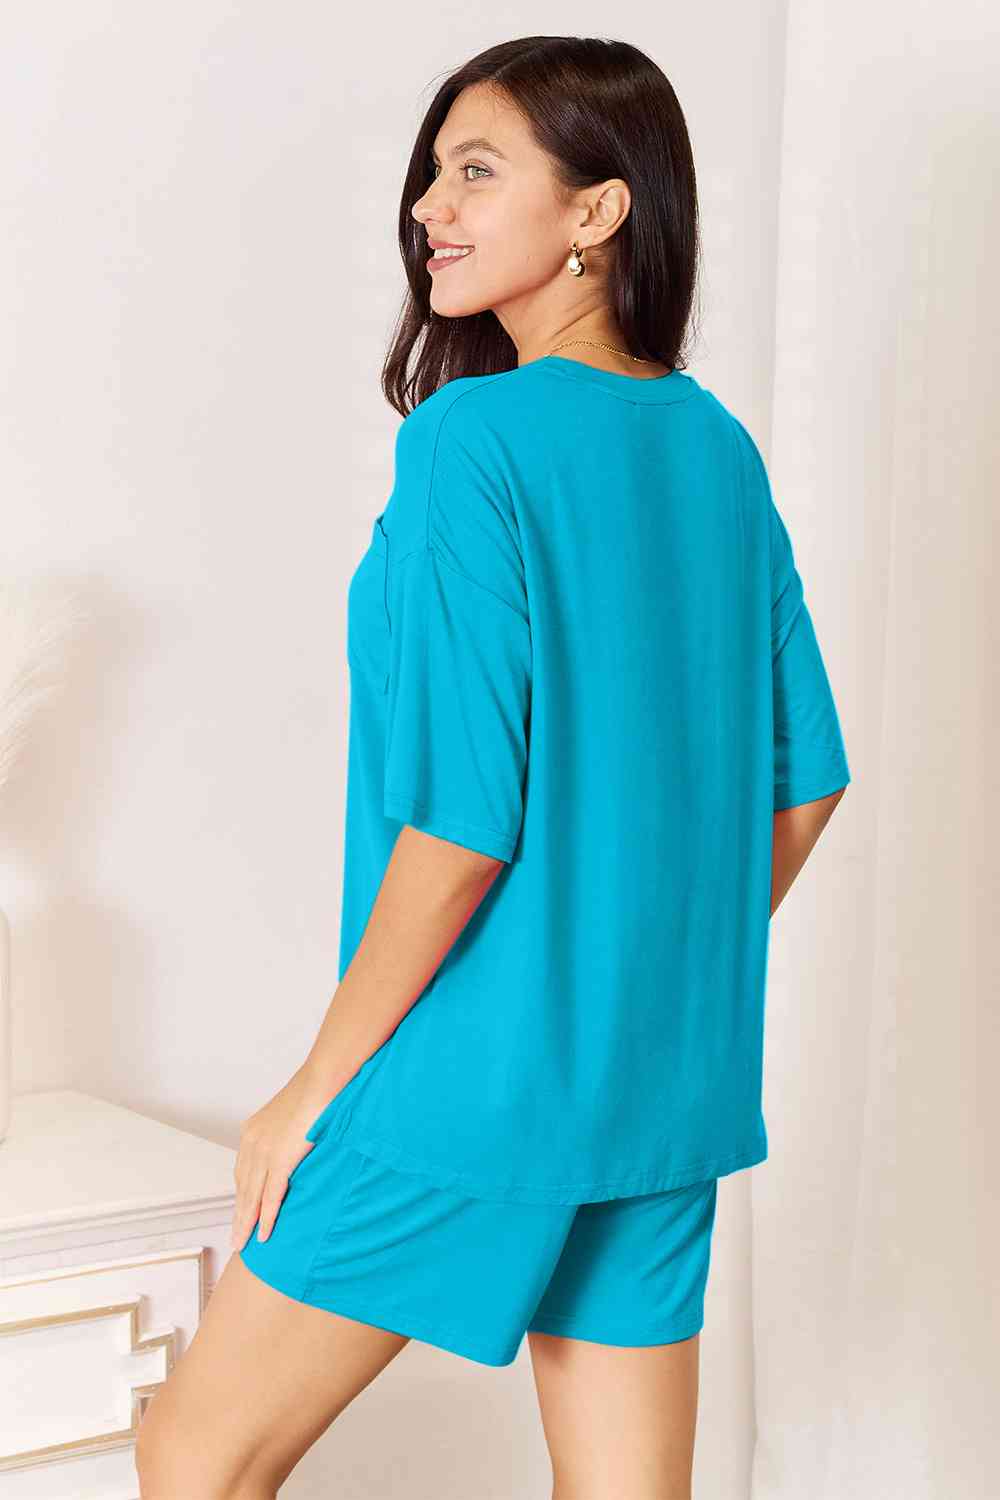 Basic Bae Full Size Soft Rayon Half Sleeve Top and Shorts Set - By Baano